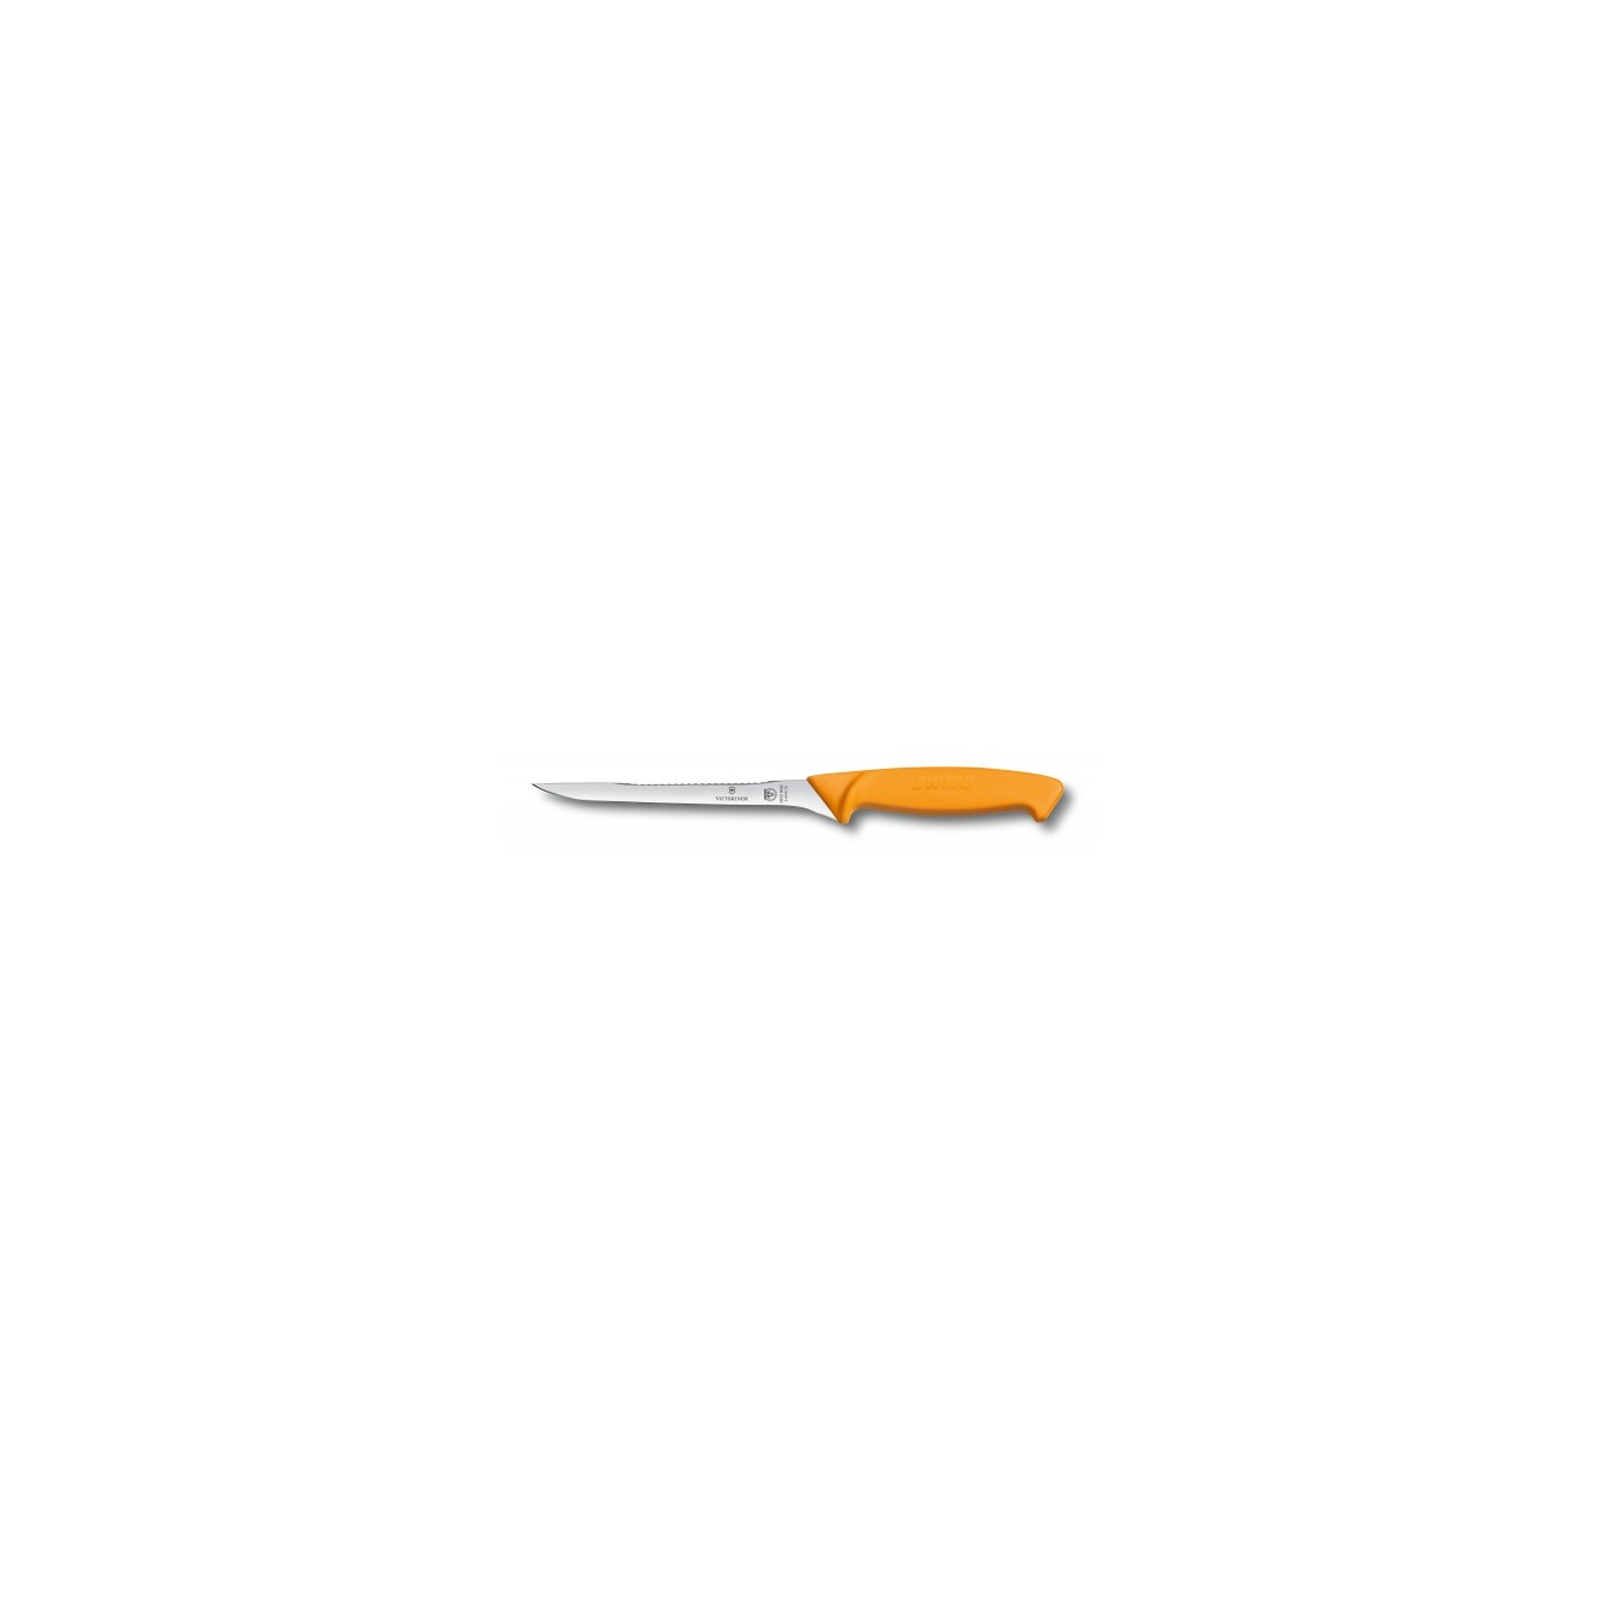 Кухонный нож Victorinox Swibo, Filleting, оранжевый, 16 см (5.8448.16)